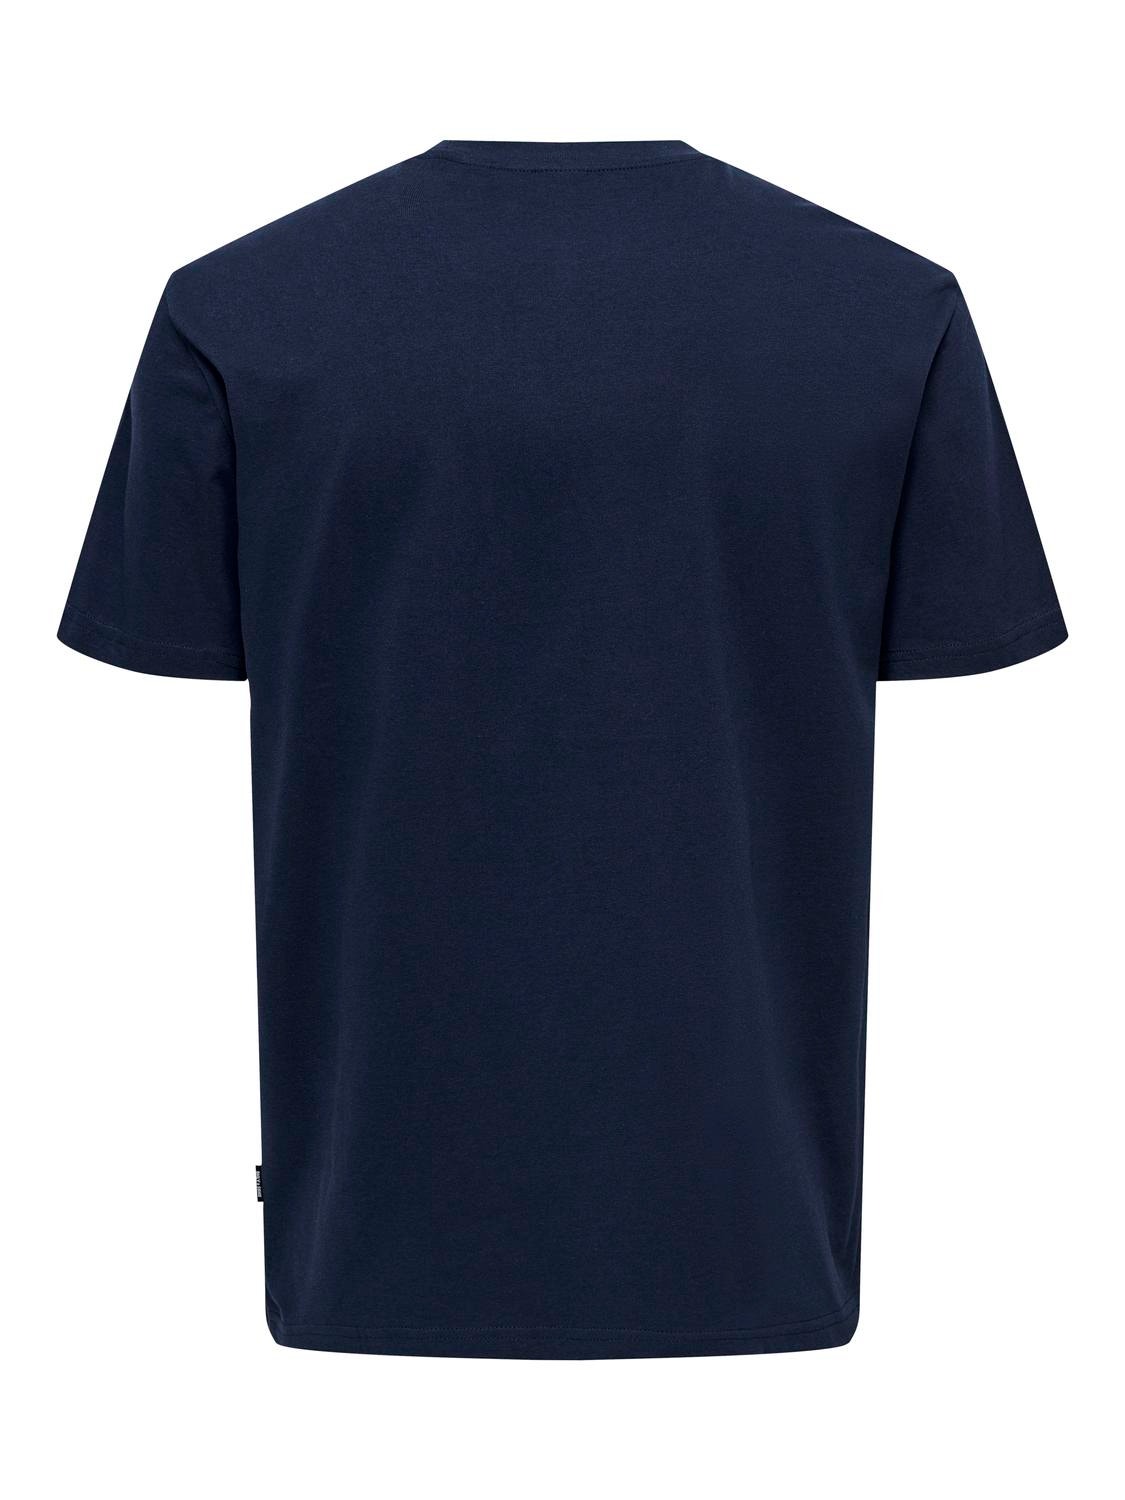 ONLY & SONS Camisetas Corte regular Cuello redondo -Navy Blazer - 22028688